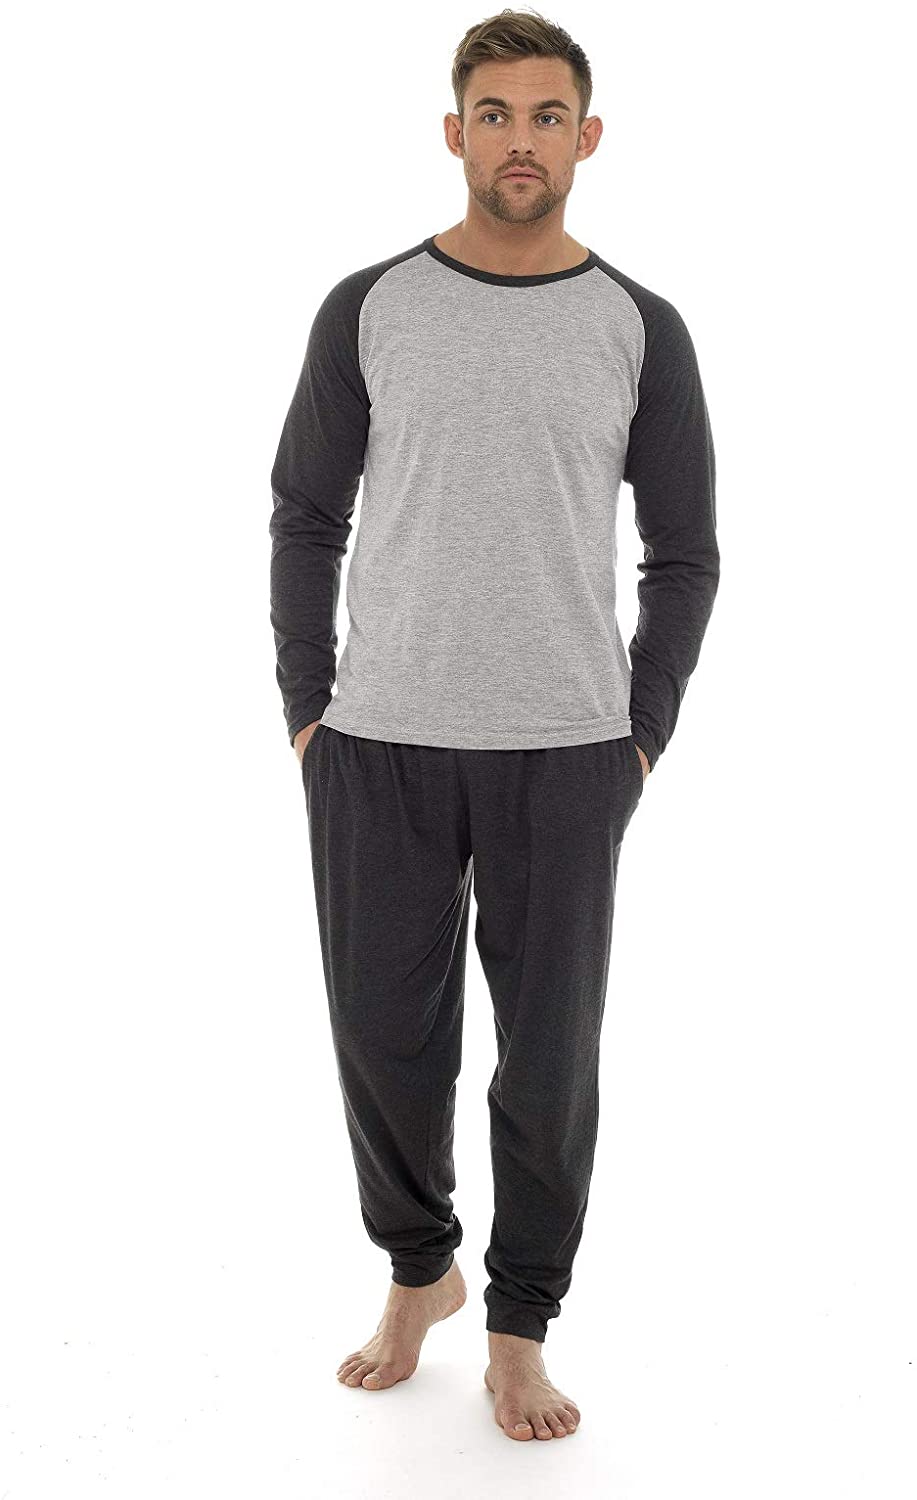 CityComfort Super Soft Cotton Mix Pyjamas Set Loungewear for Man | eBay